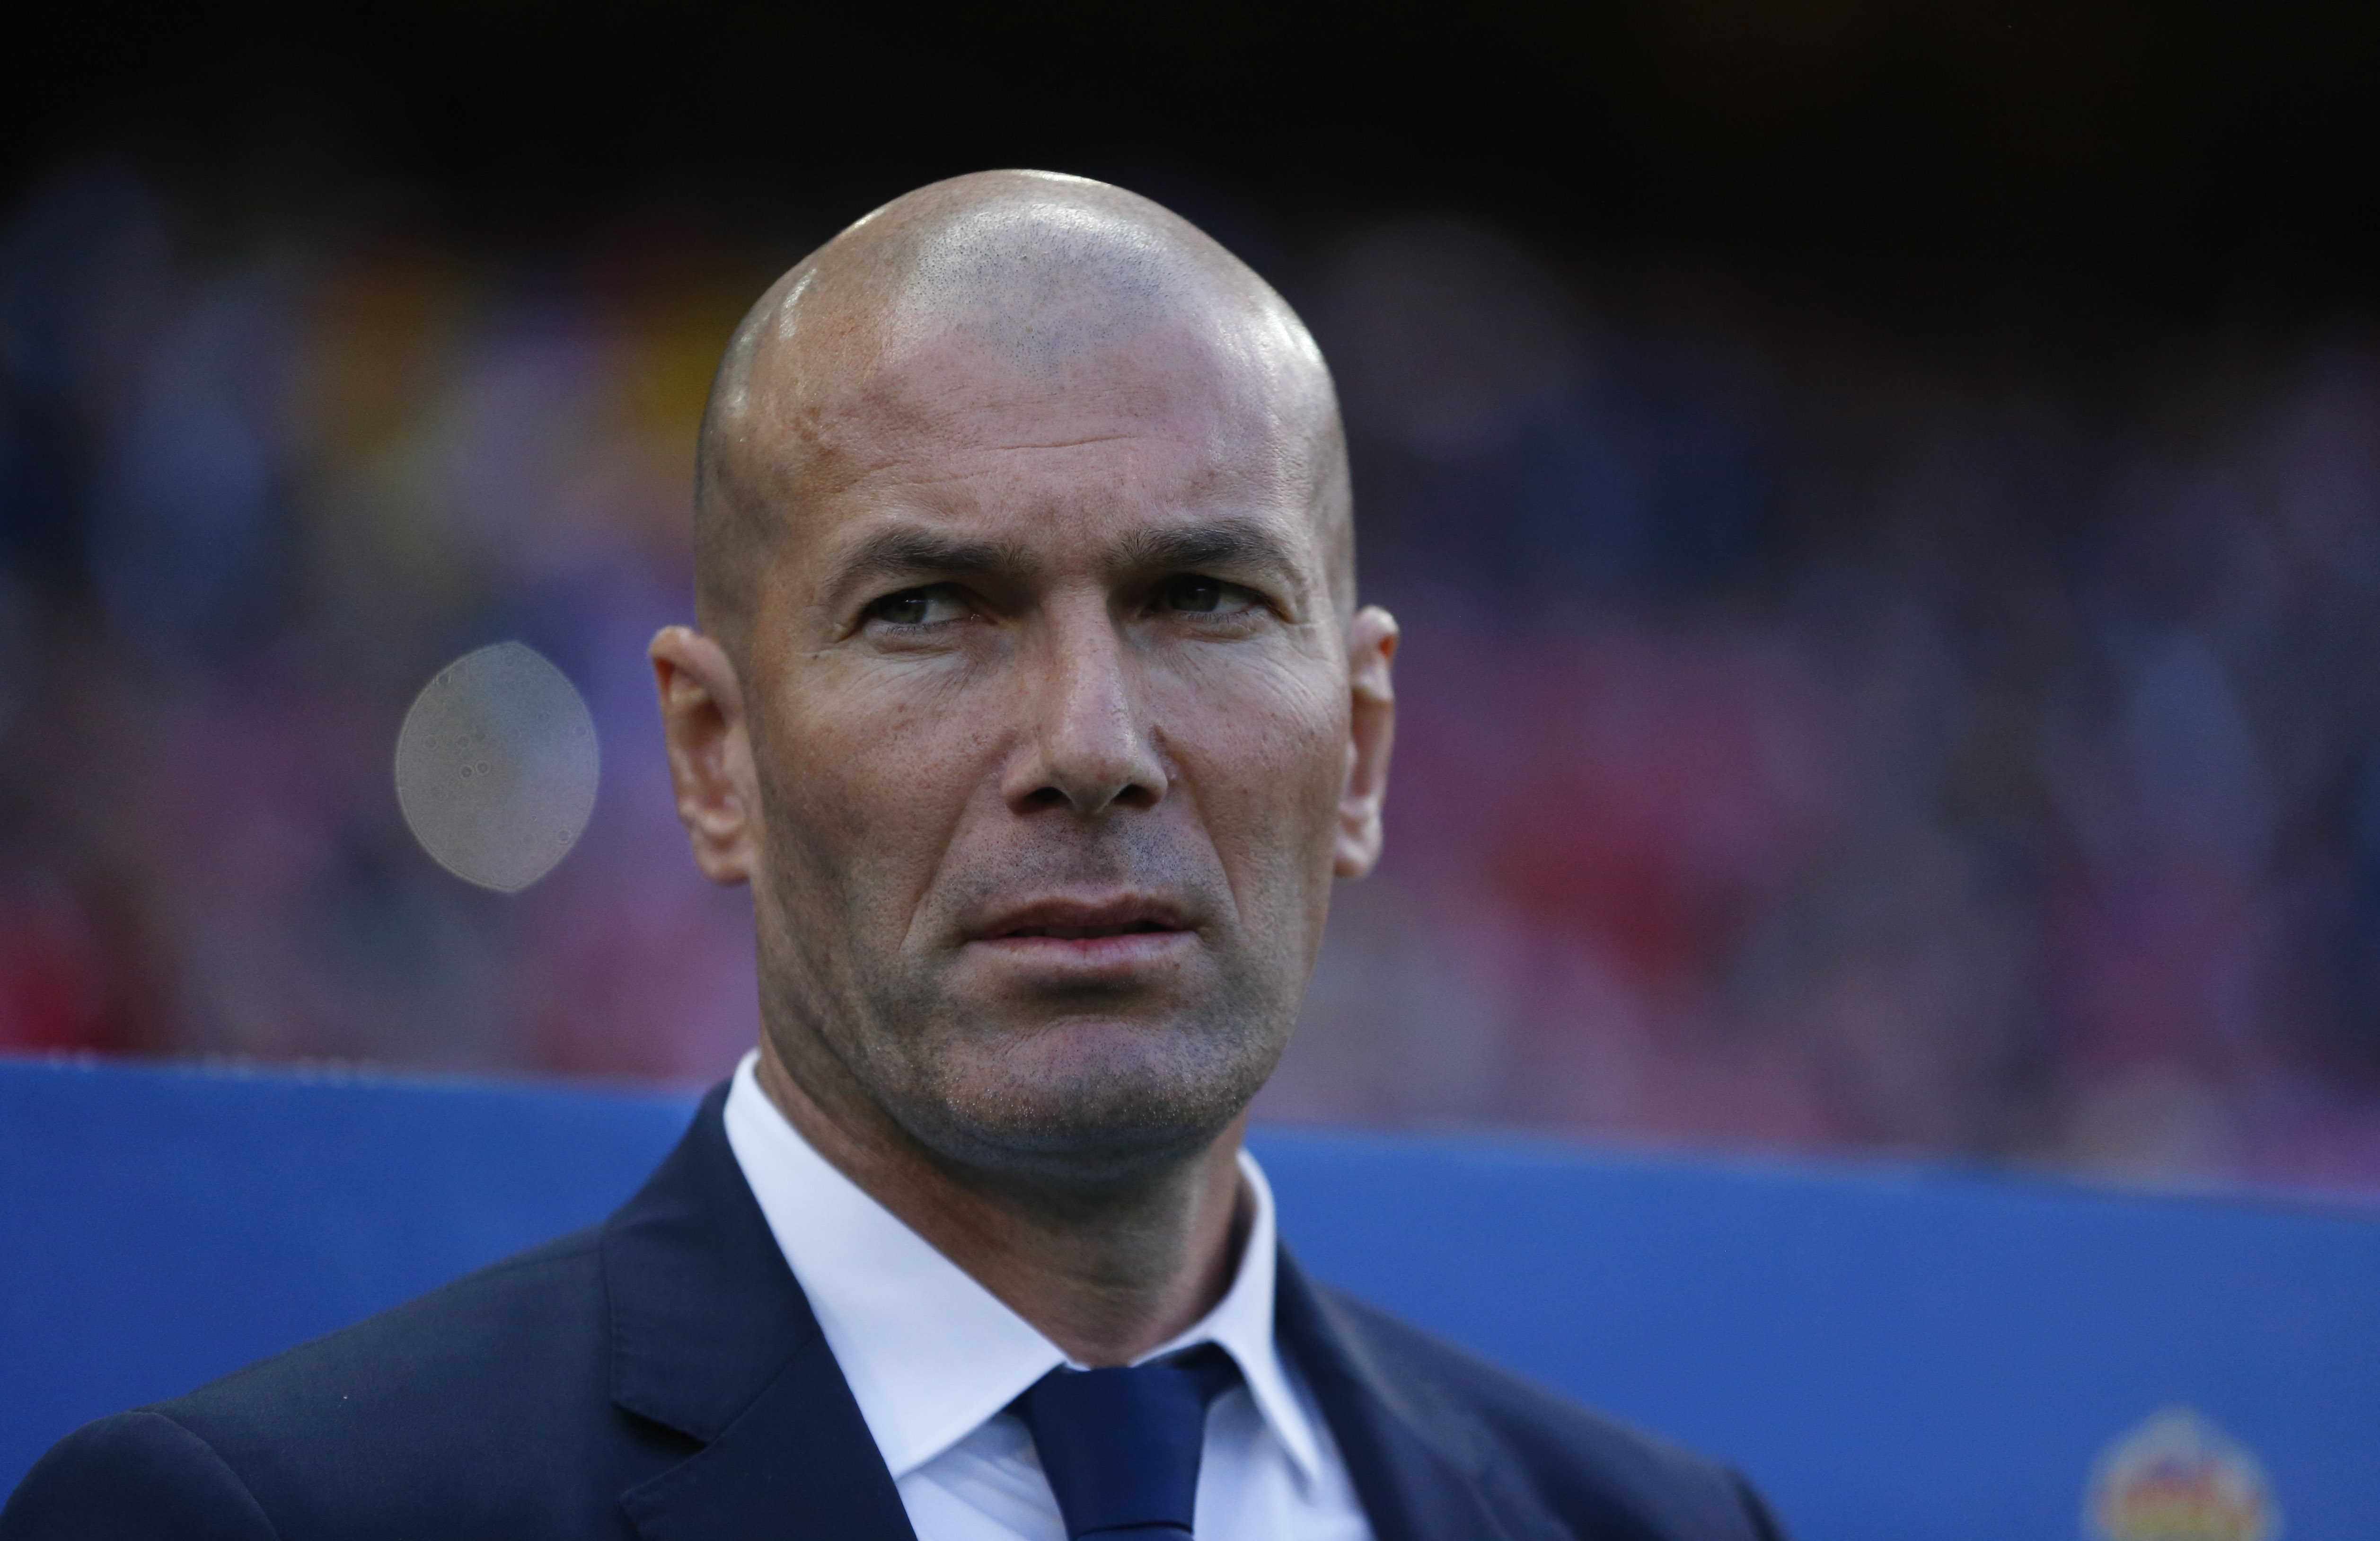 Football: Zidane unsure when Bale will return from injury